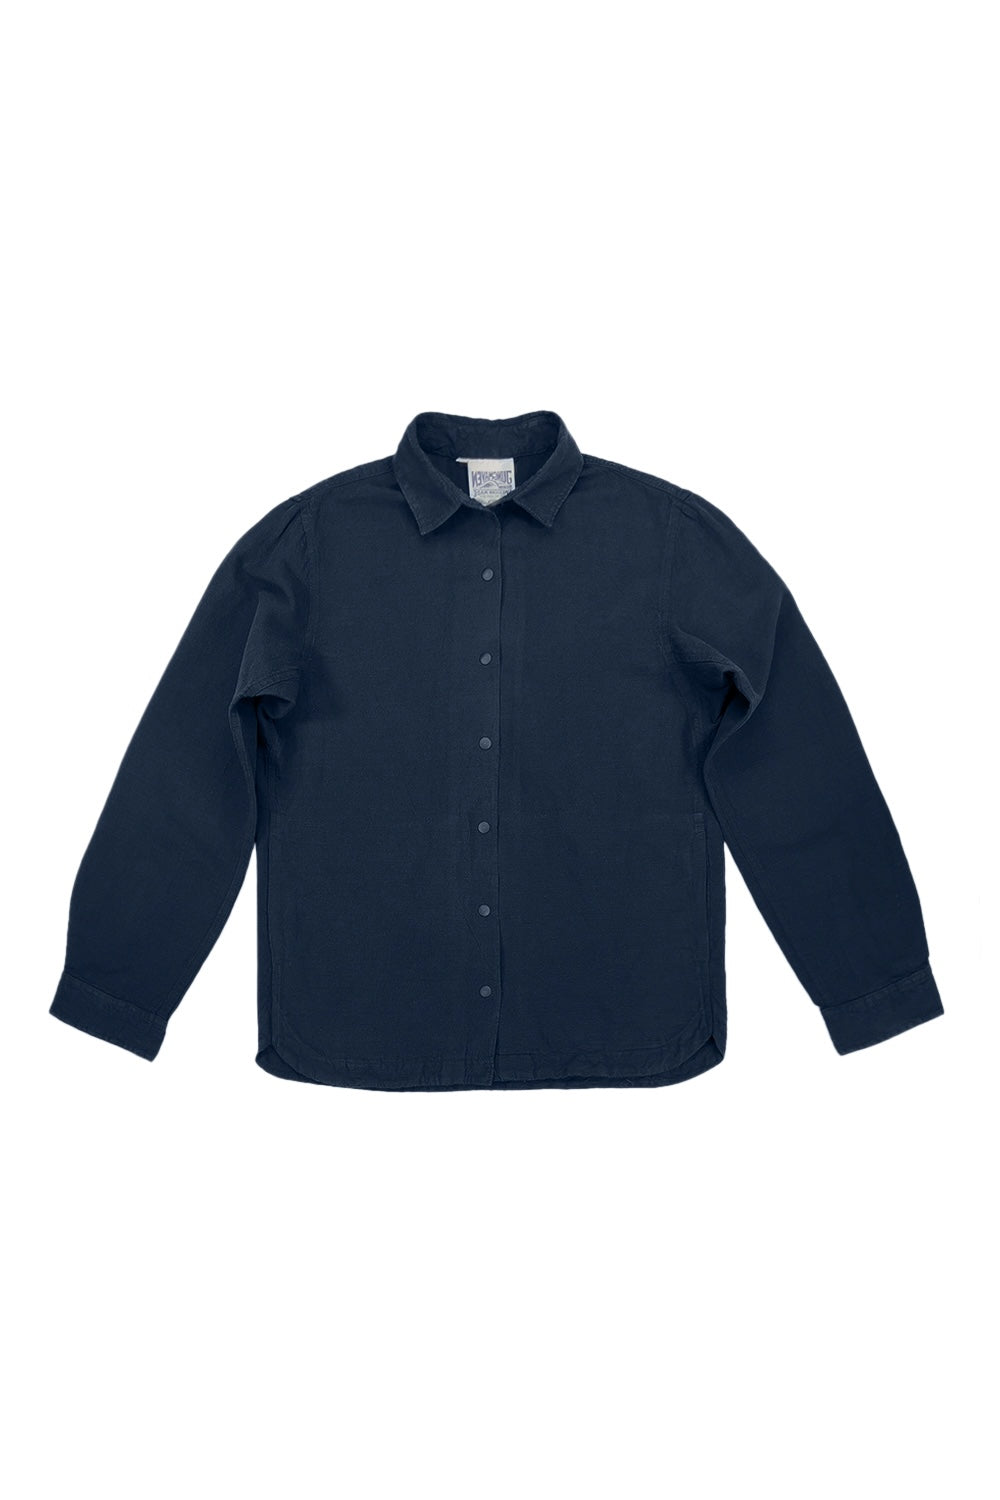 Sandpoint Snap Jacket | Jungmaven Hemp Clothing & Accessories / Color: Navy